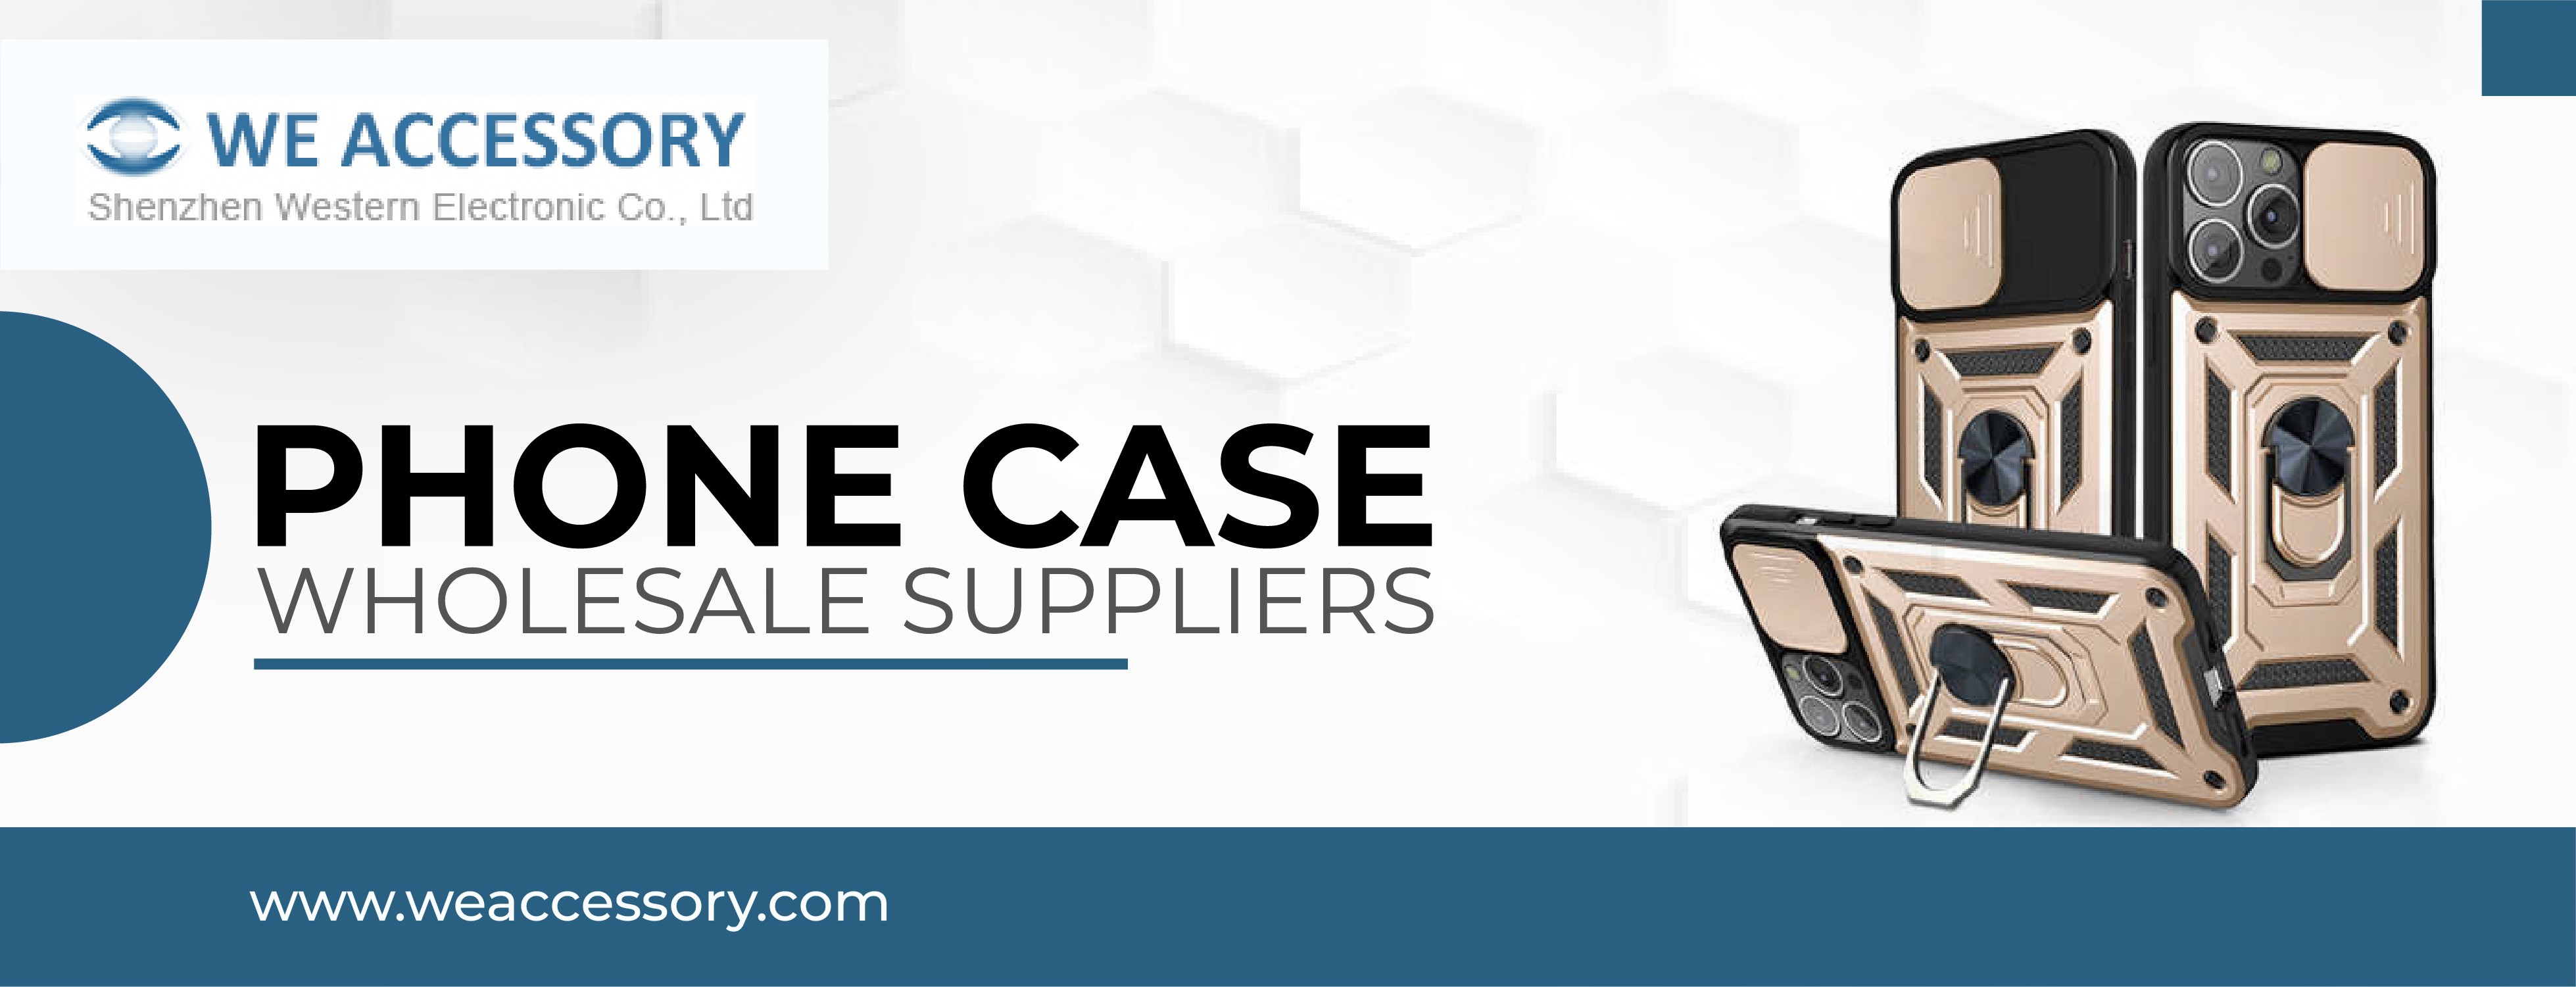 phone case wholesale suppliers